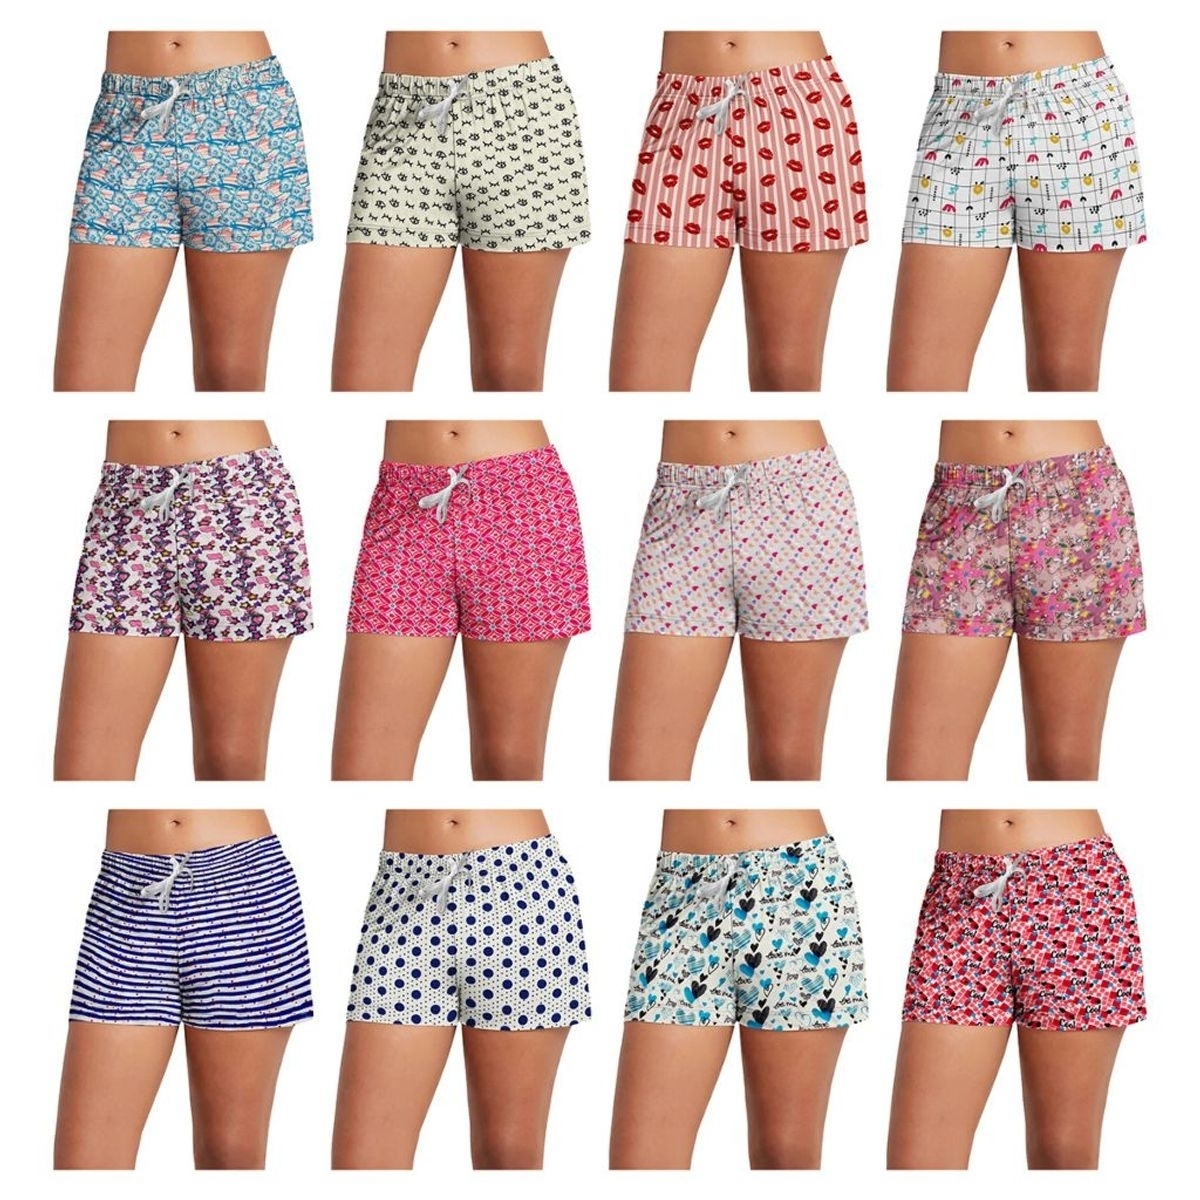 5-Pack: Women's Super-Soft Lightweight Fun Printed Comfy Lounge Bottom Pajama Shorts W/ Drawstring - Small, Love